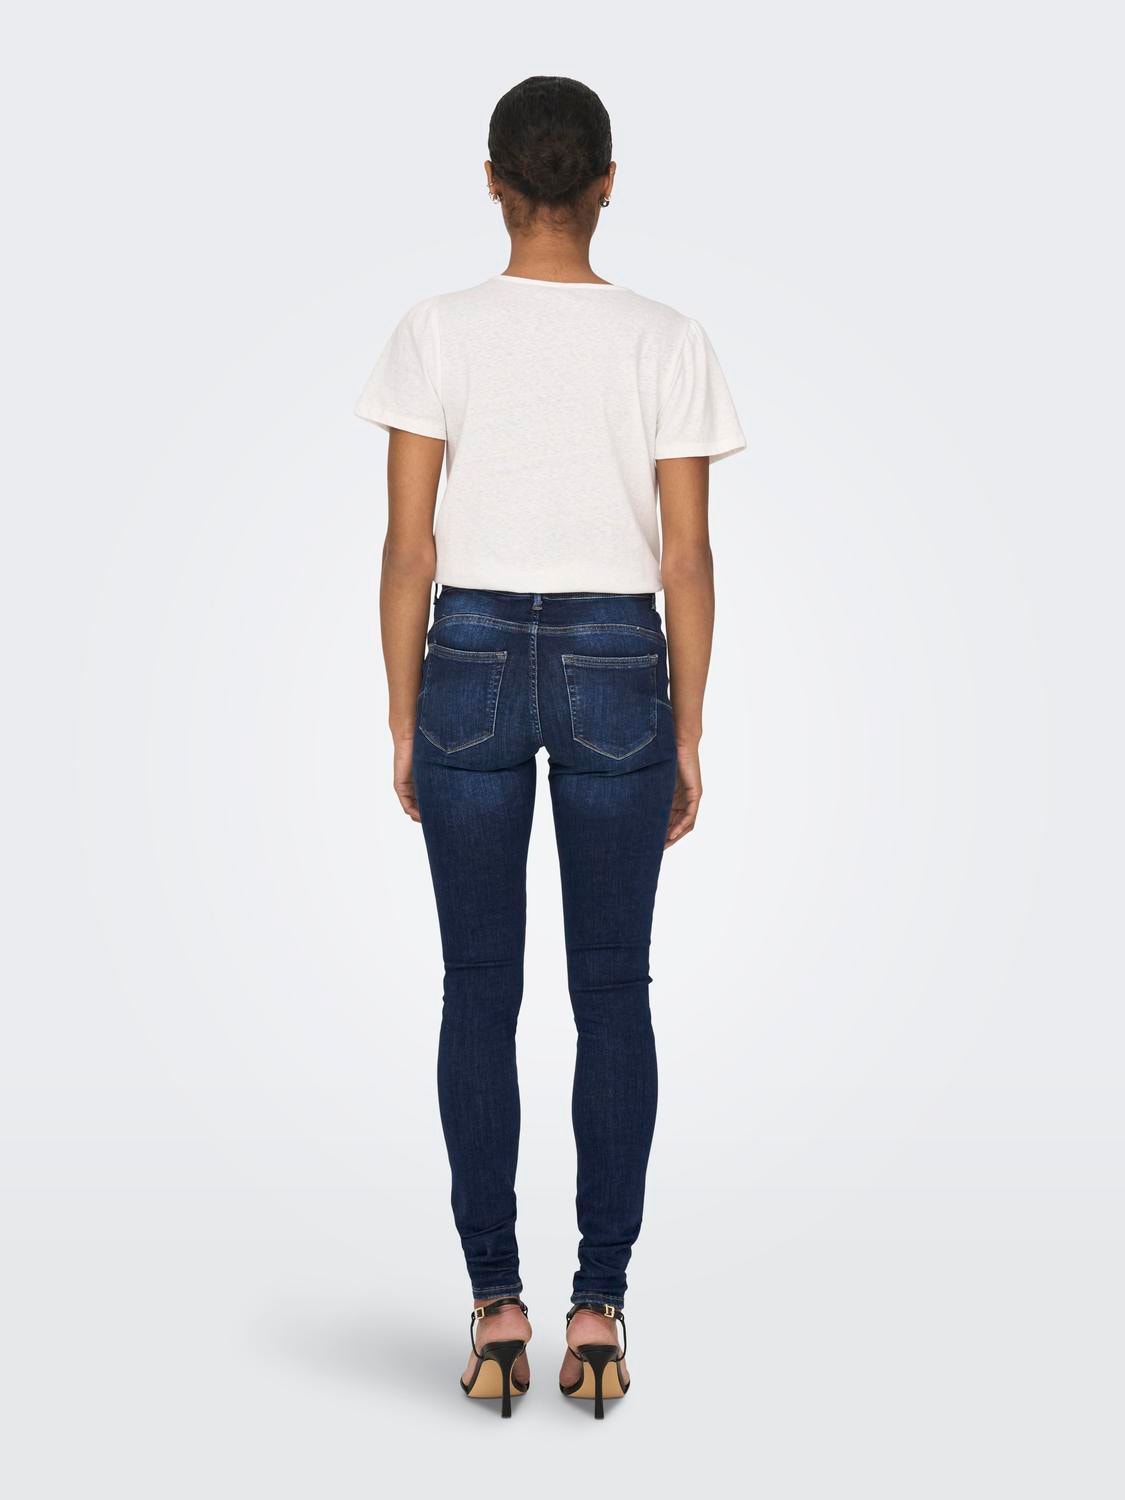 ONLY ONLPUSH SHAPE Regular waist Skinny Jeans -Dark Blue Denim - 15235035